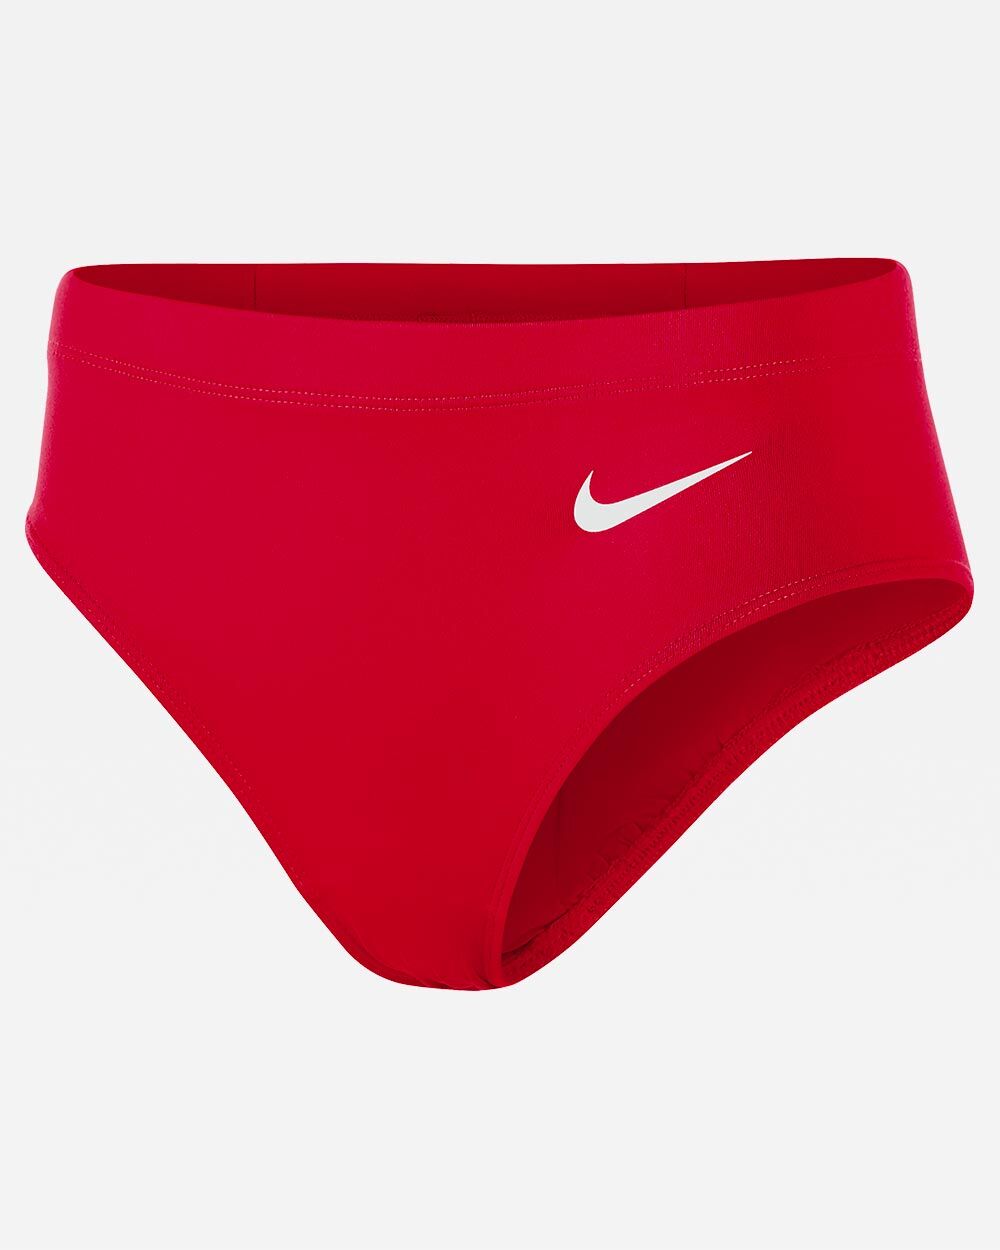 Bragas de running Nike Stock Rojo para Mujeres - NT0309-657